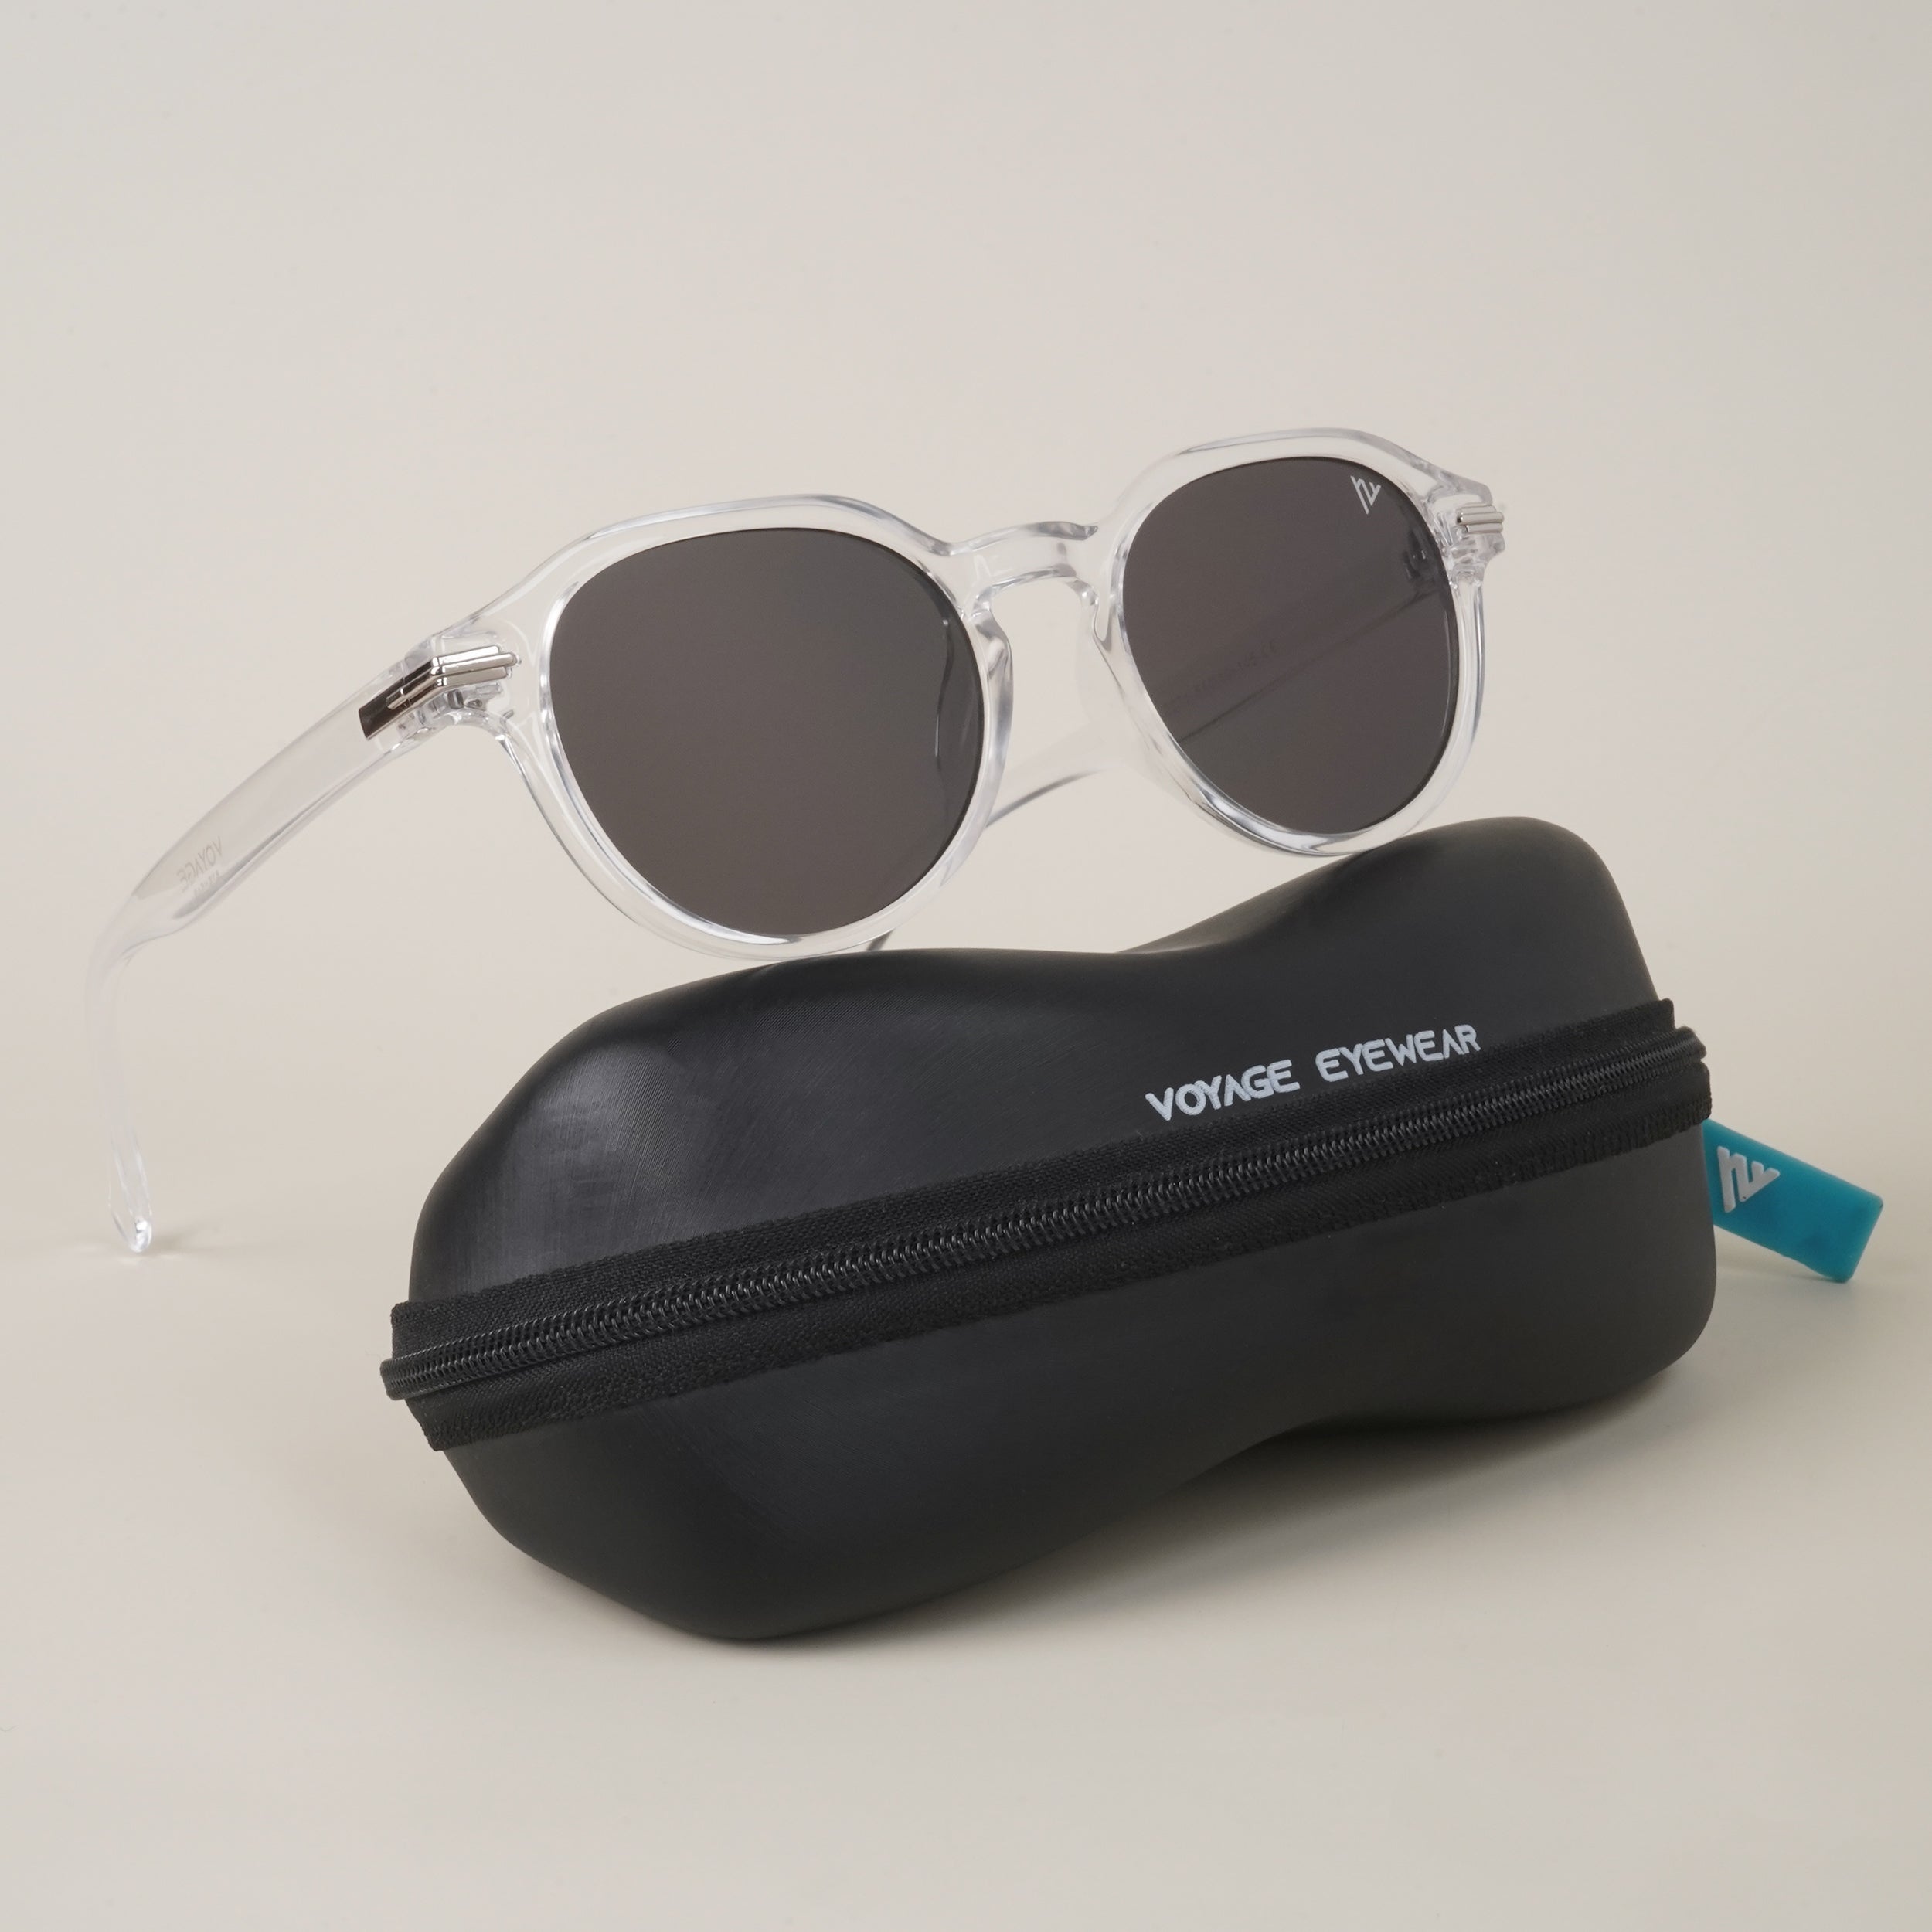 Voyage Black Round Sunglasses - MG3755